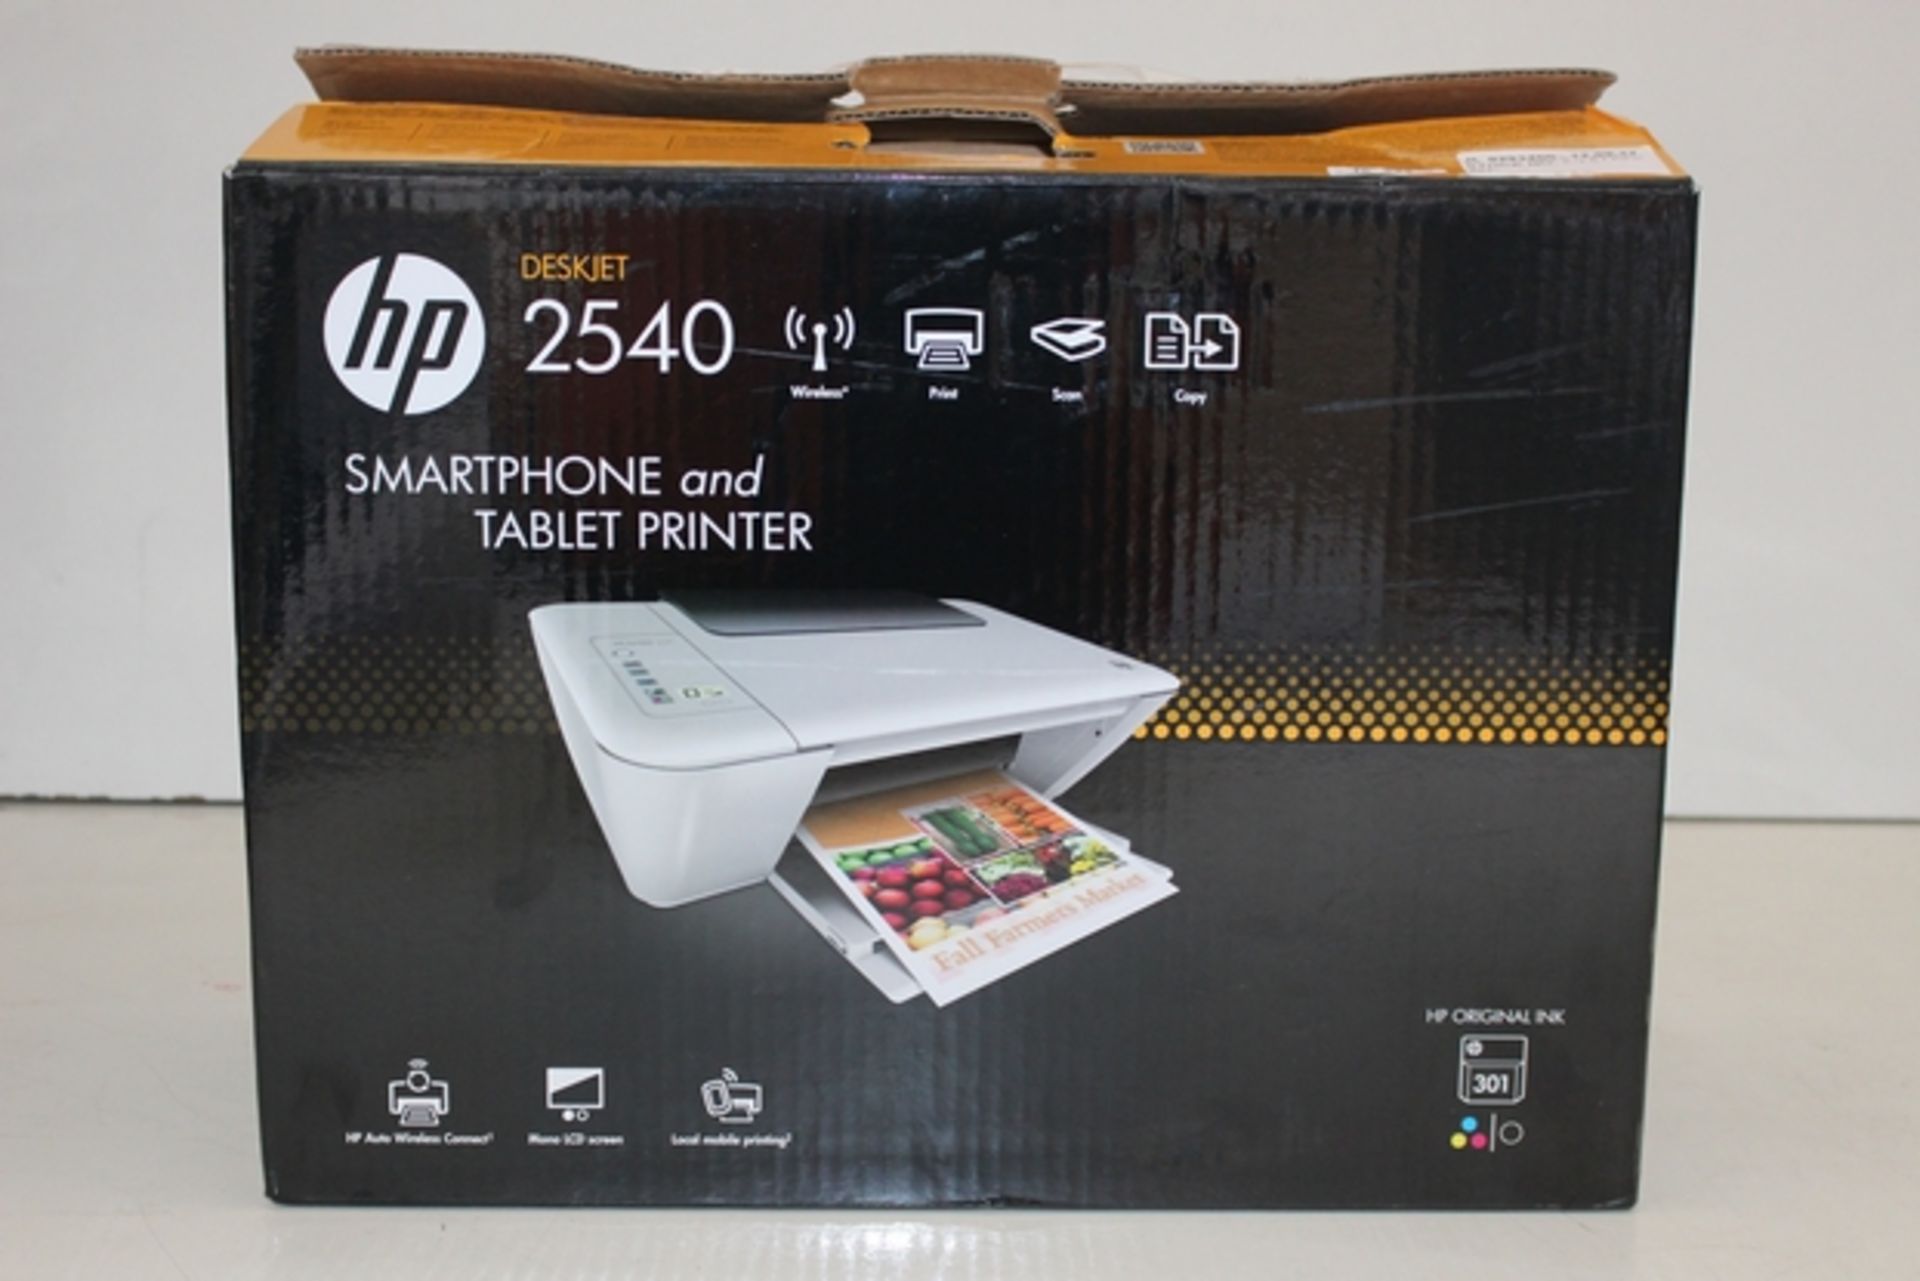 1X BOXED HP DESK JET 2540 SMART PHONE AND TABLET PRINTER RRP £30 (JL-9293400) (12/09/17) (3431790)